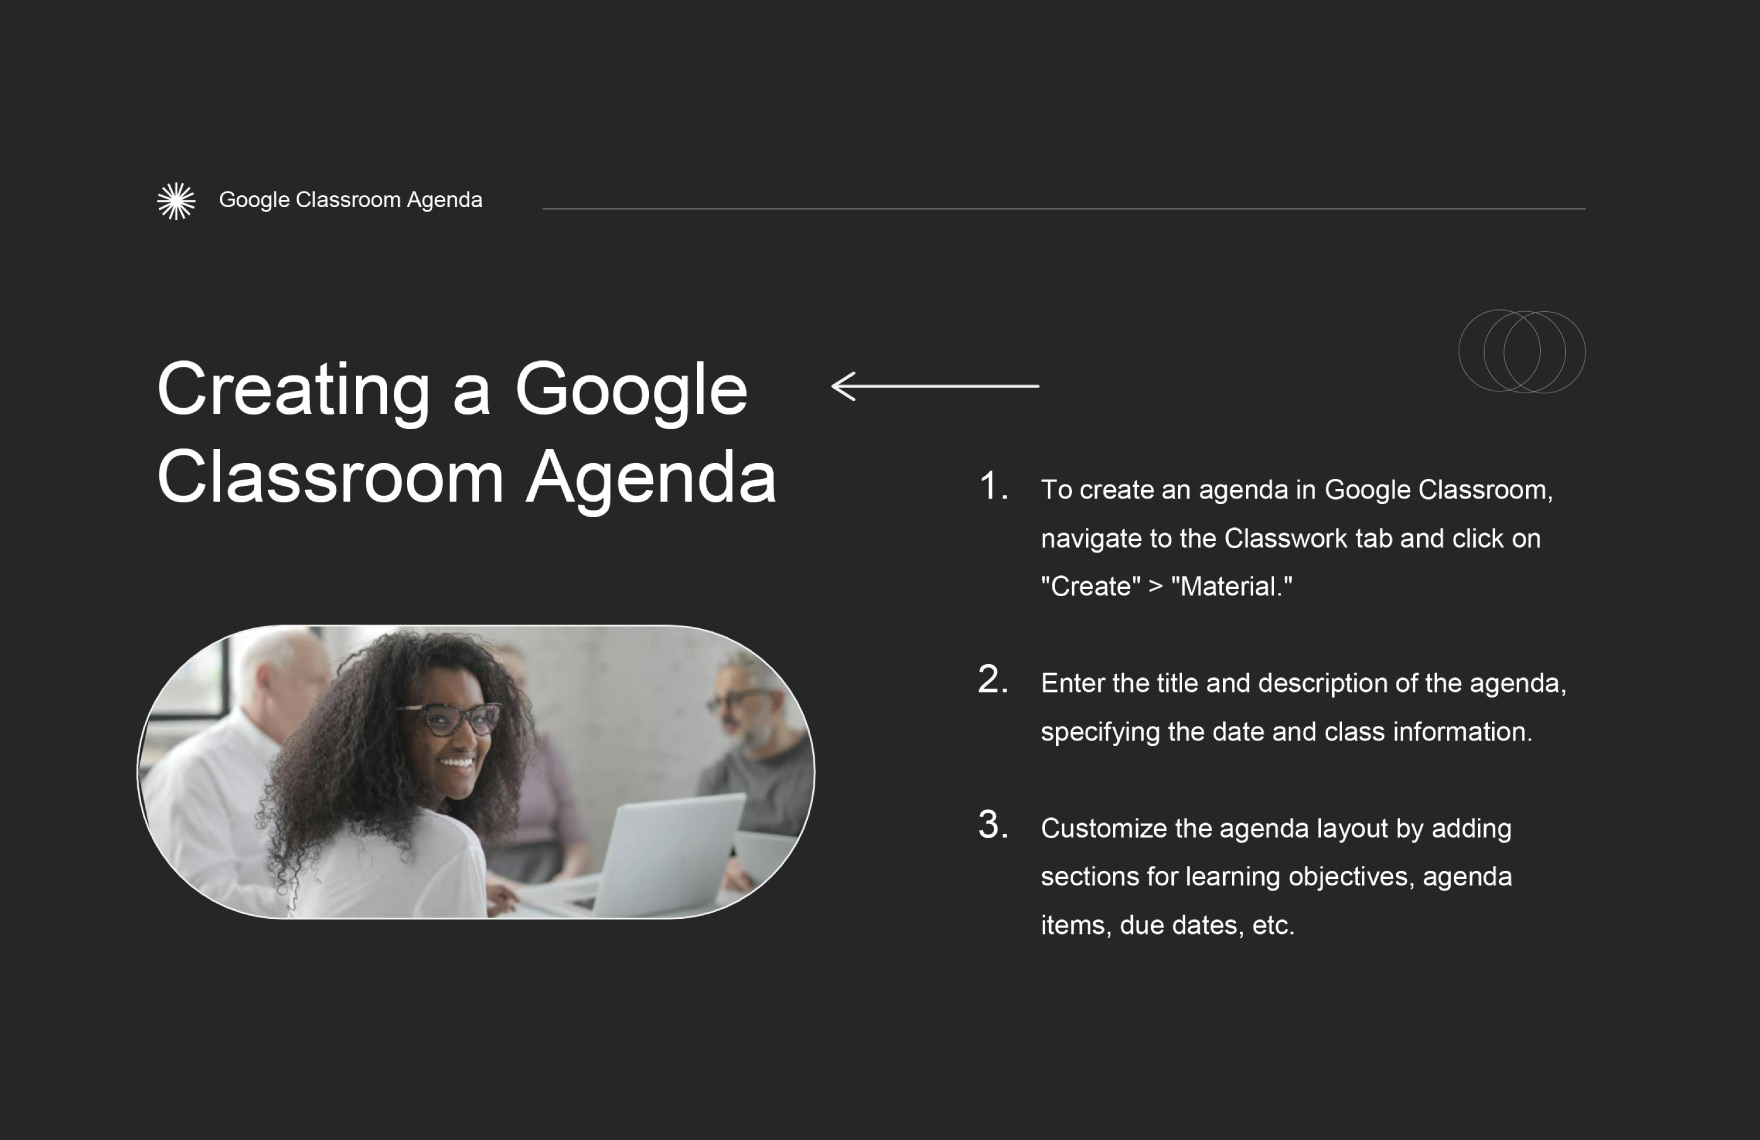 Google Classroom Agenda Template